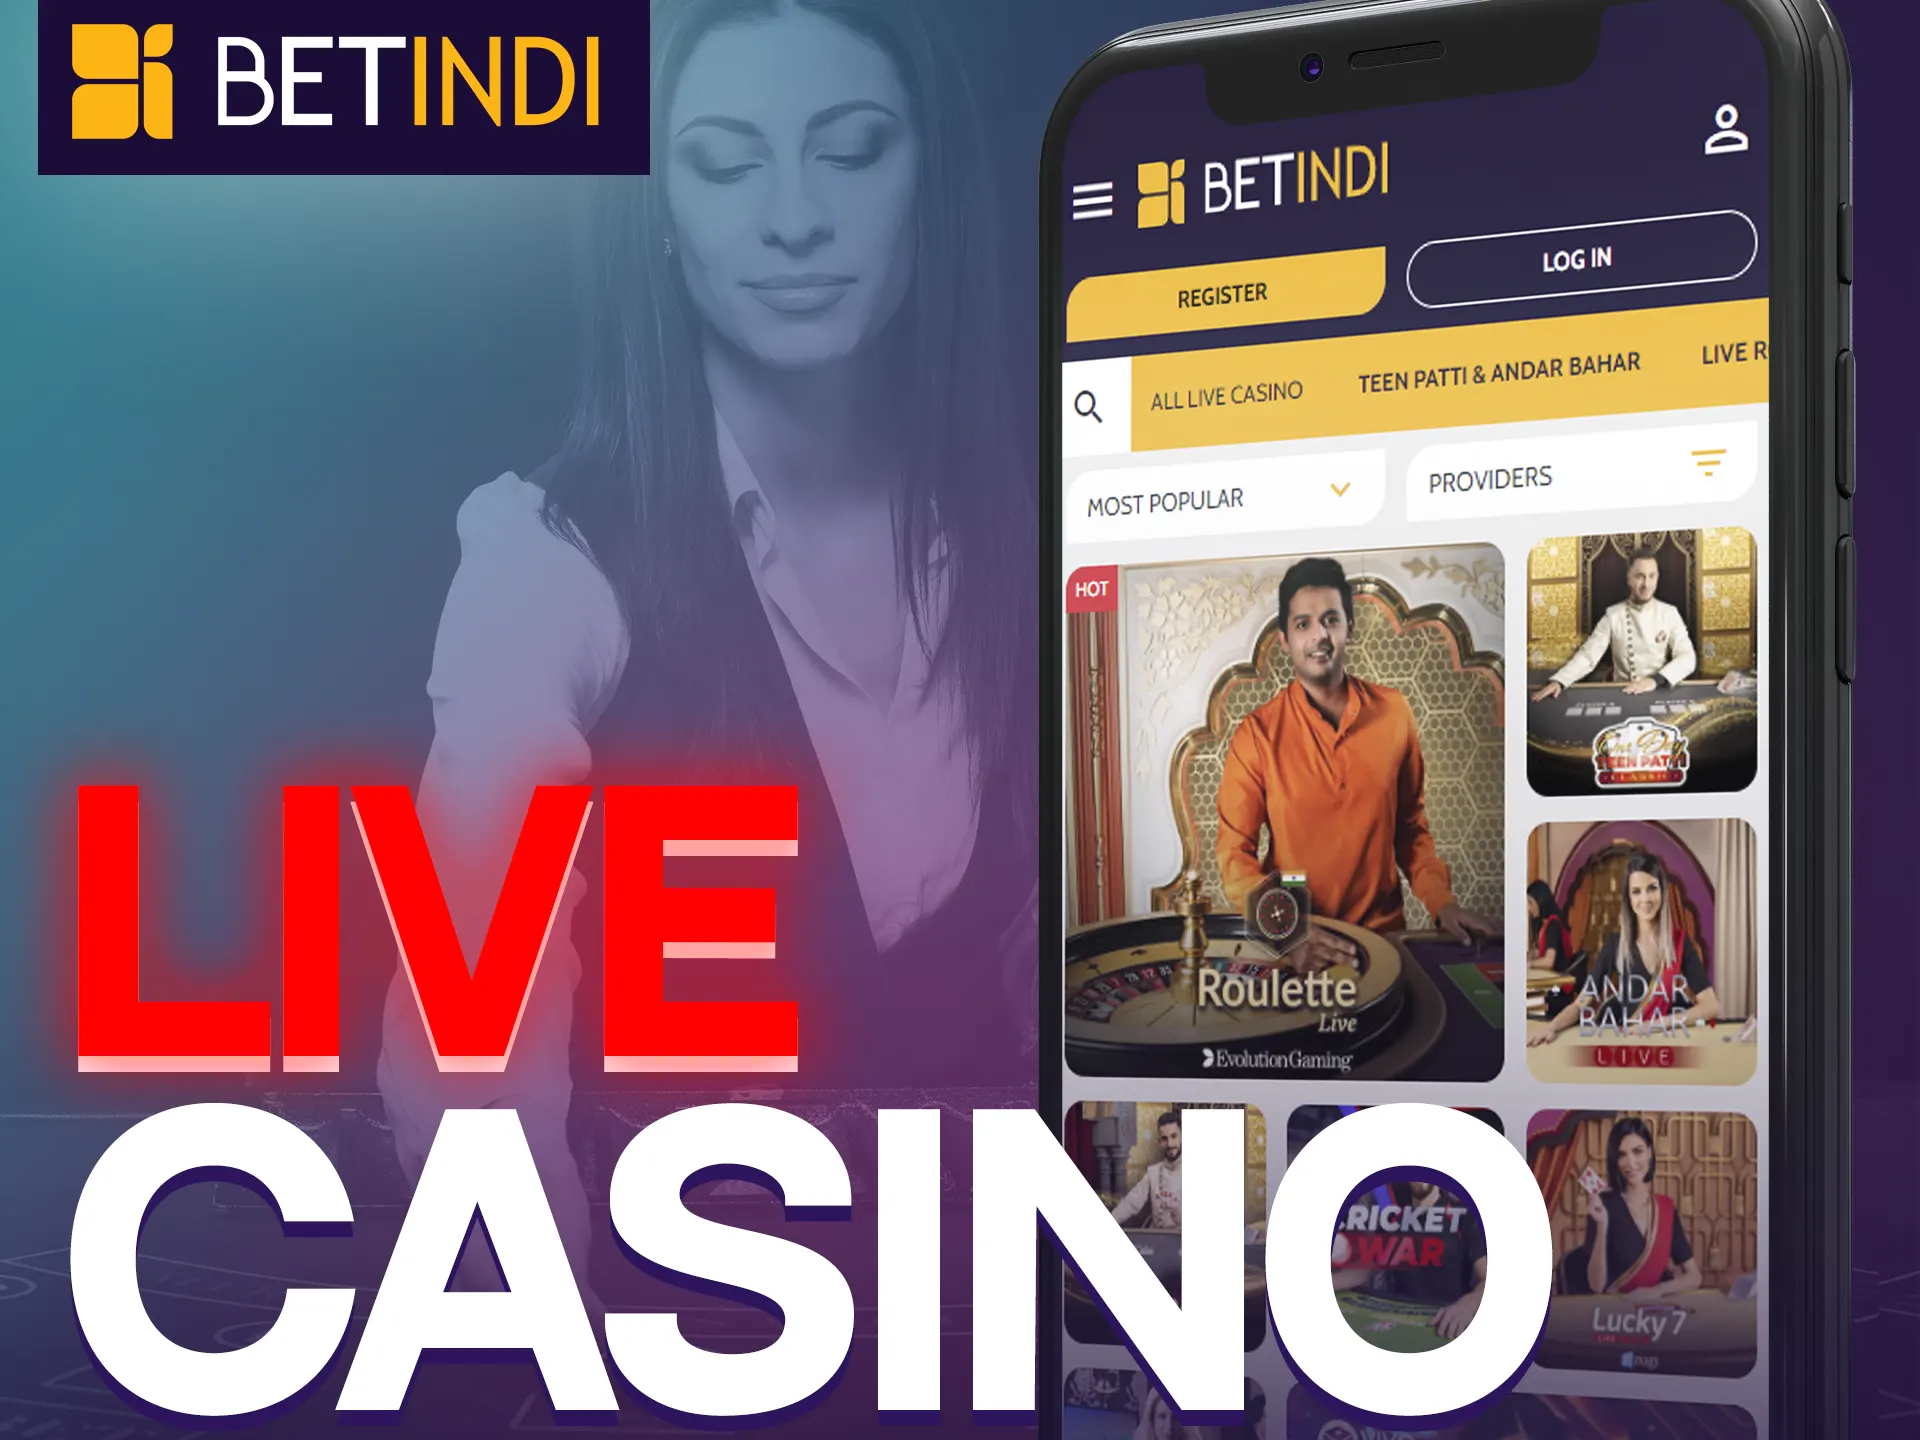 Experience live casino games on Betindi app.